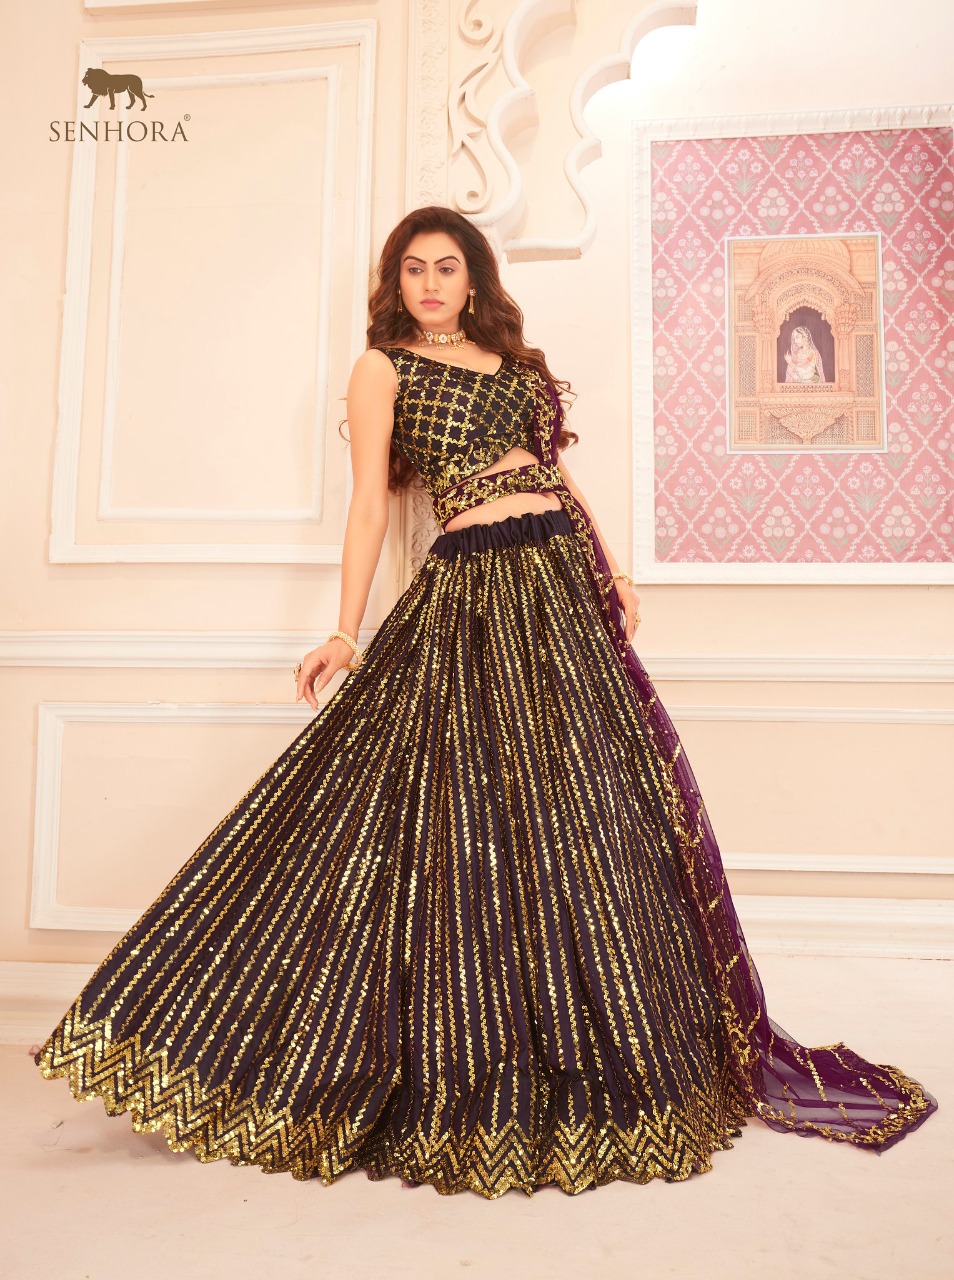 Satyam Fashion Georgette Ladies Gown Type Lehenga Choli at Rs 4000 in Surat